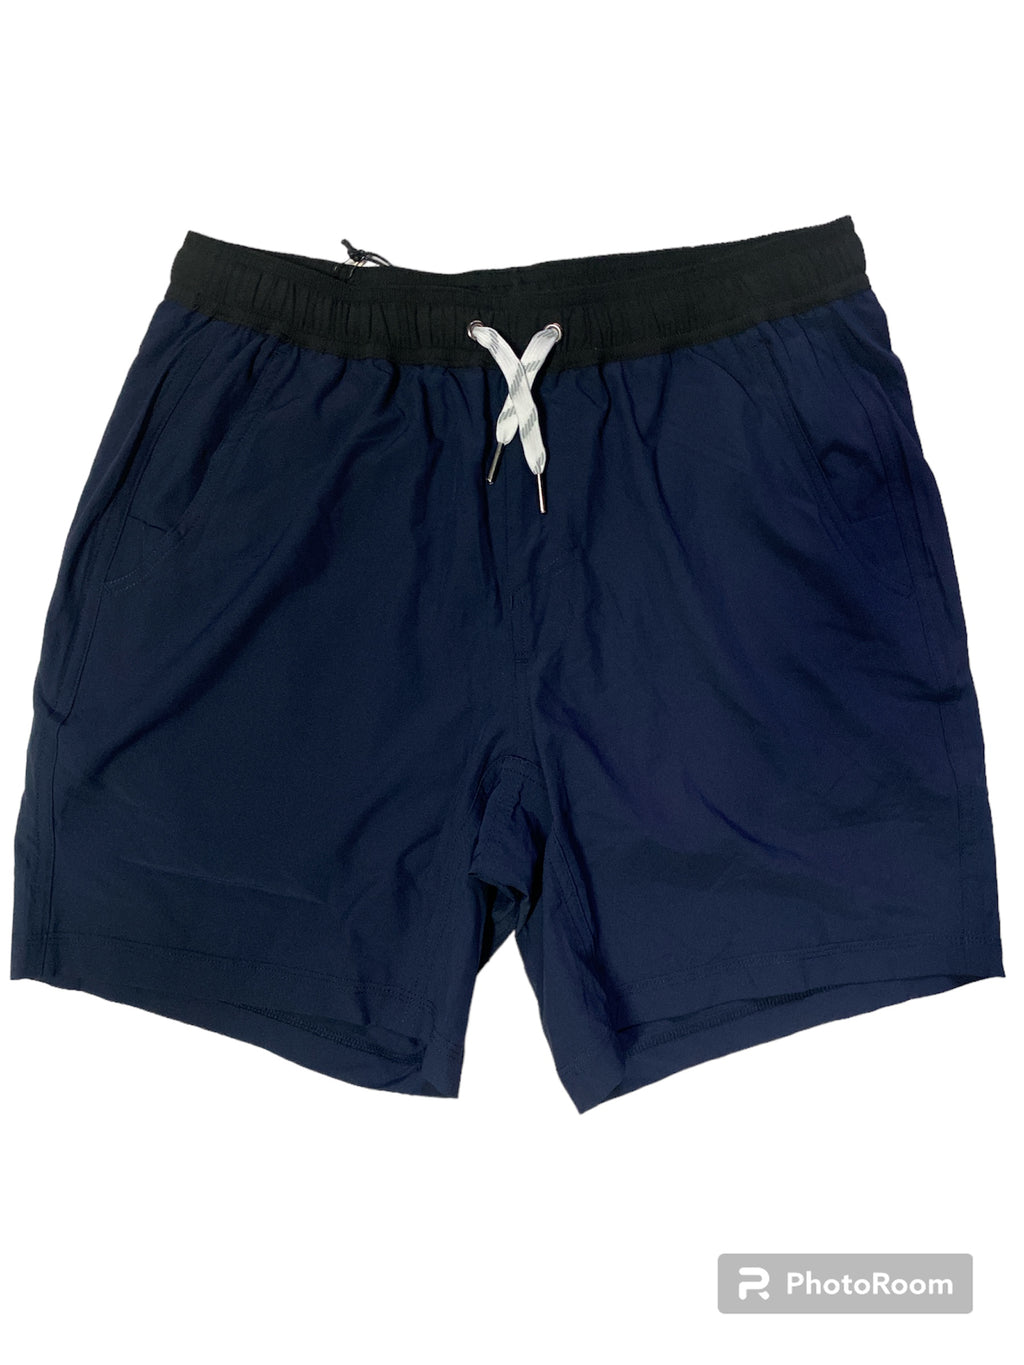 Meripex 2-Tone Navy Swim Shorts